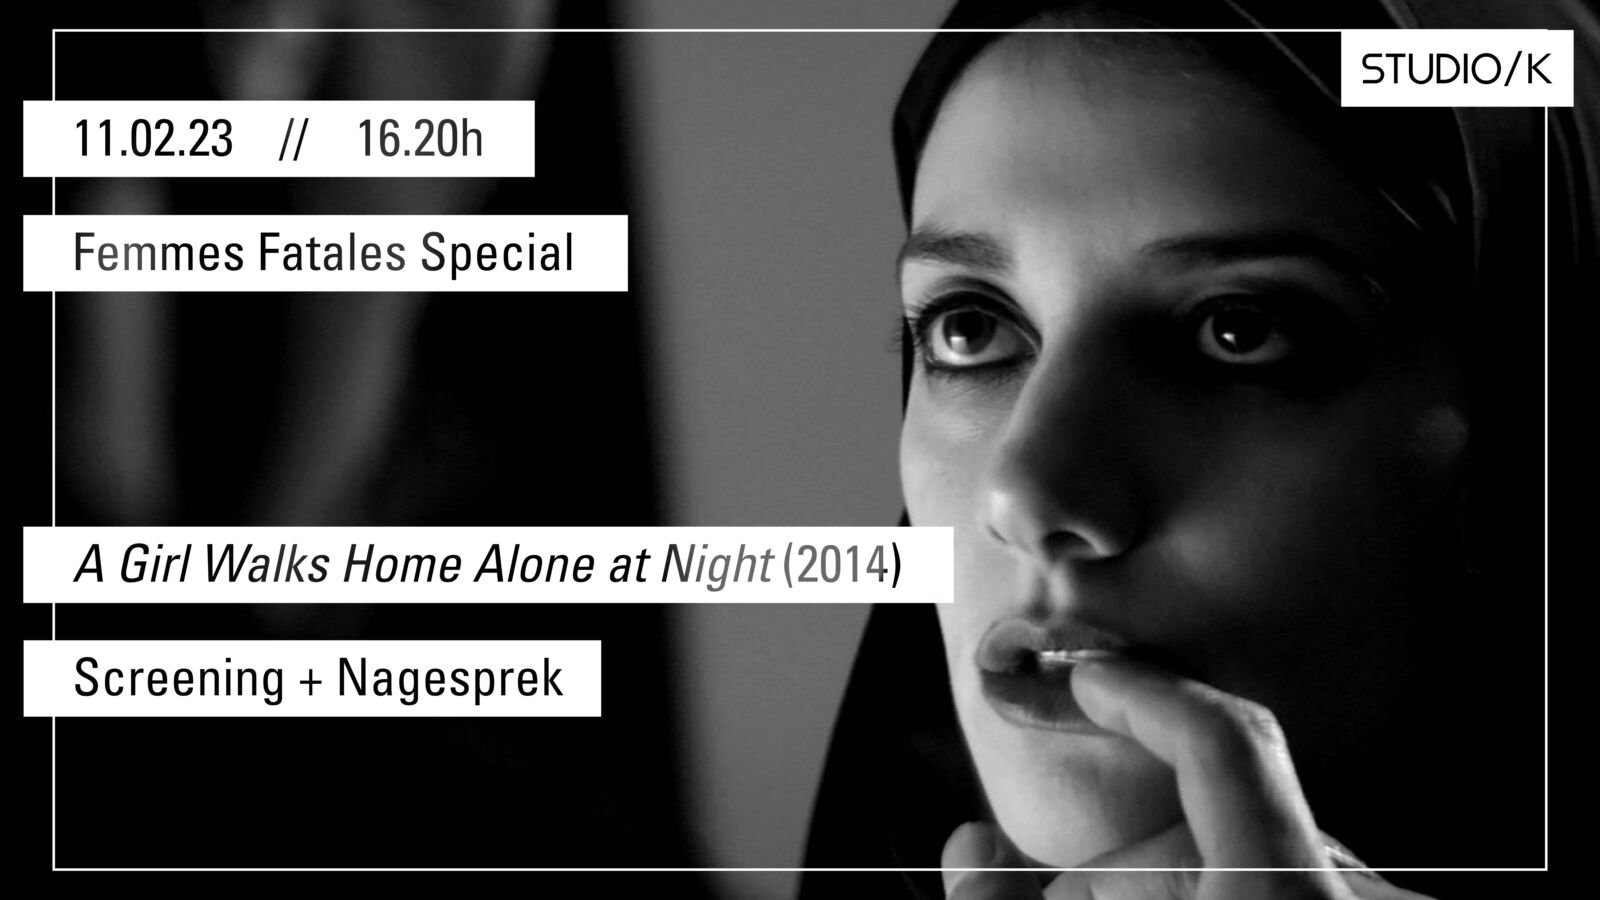 A Girl Walks Alone Home at Night: Screening + Nagesprek